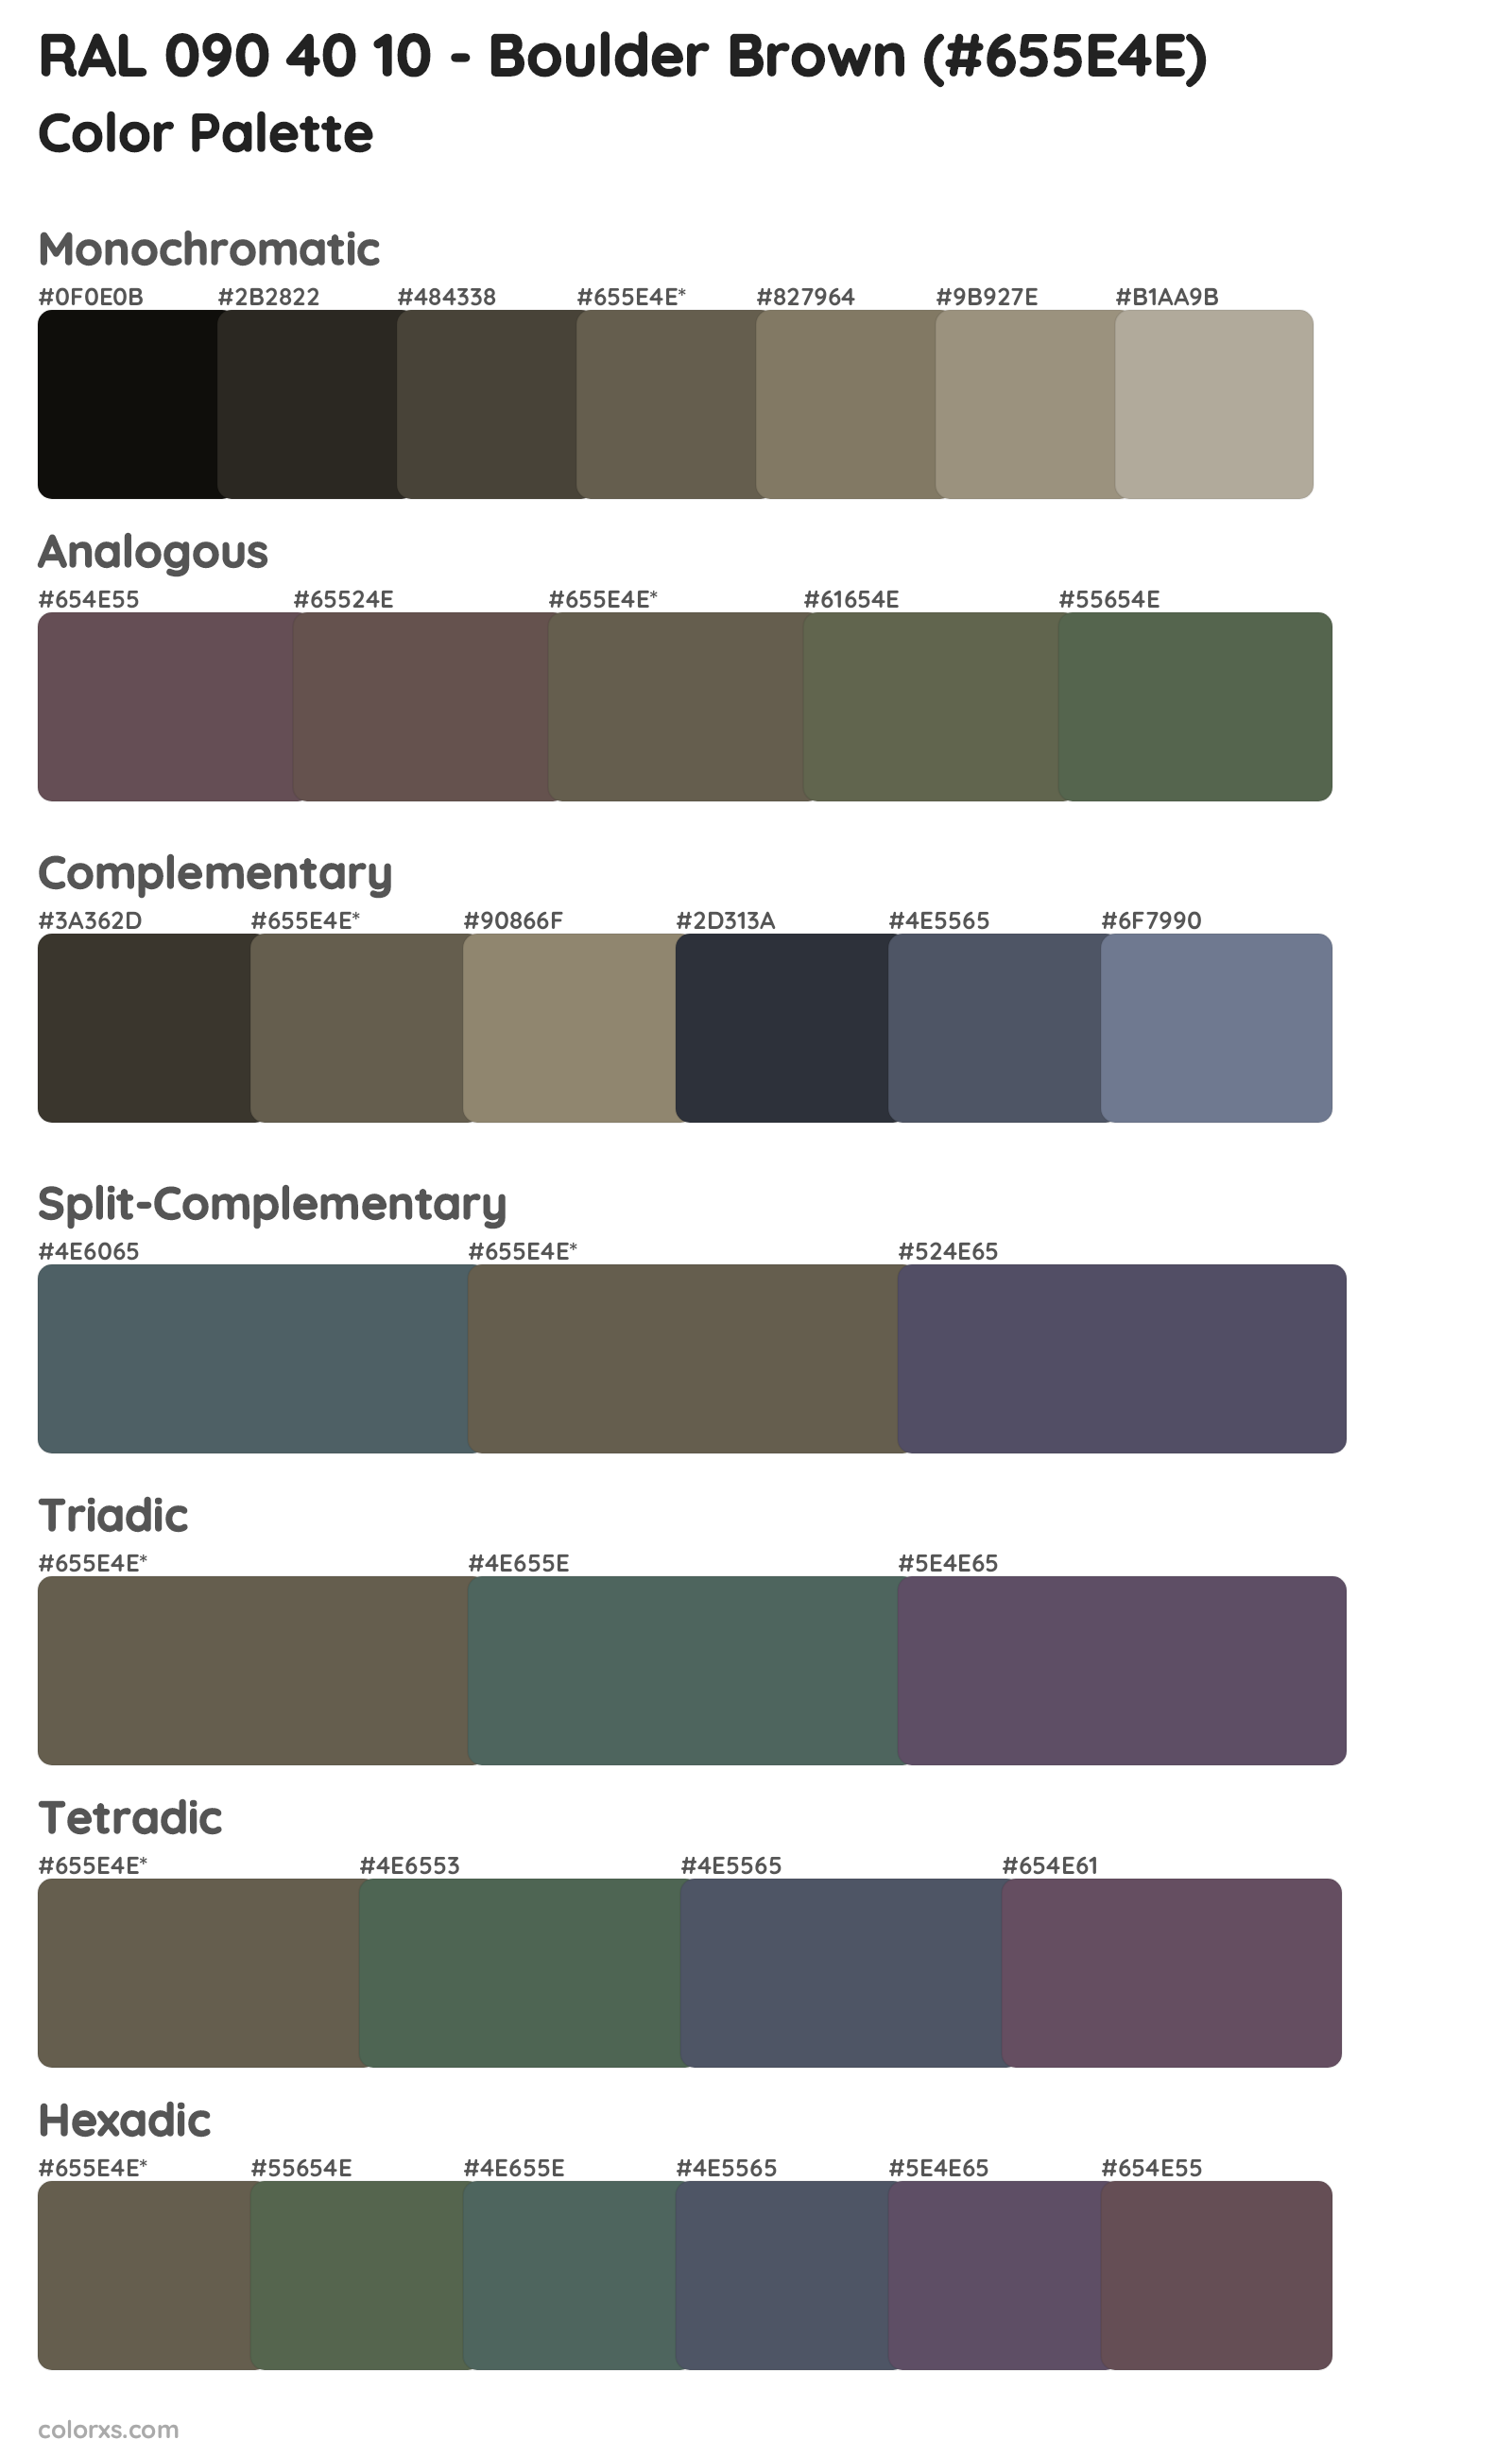 RAL 090 40 10 - Boulder Brown Color Scheme Palettes